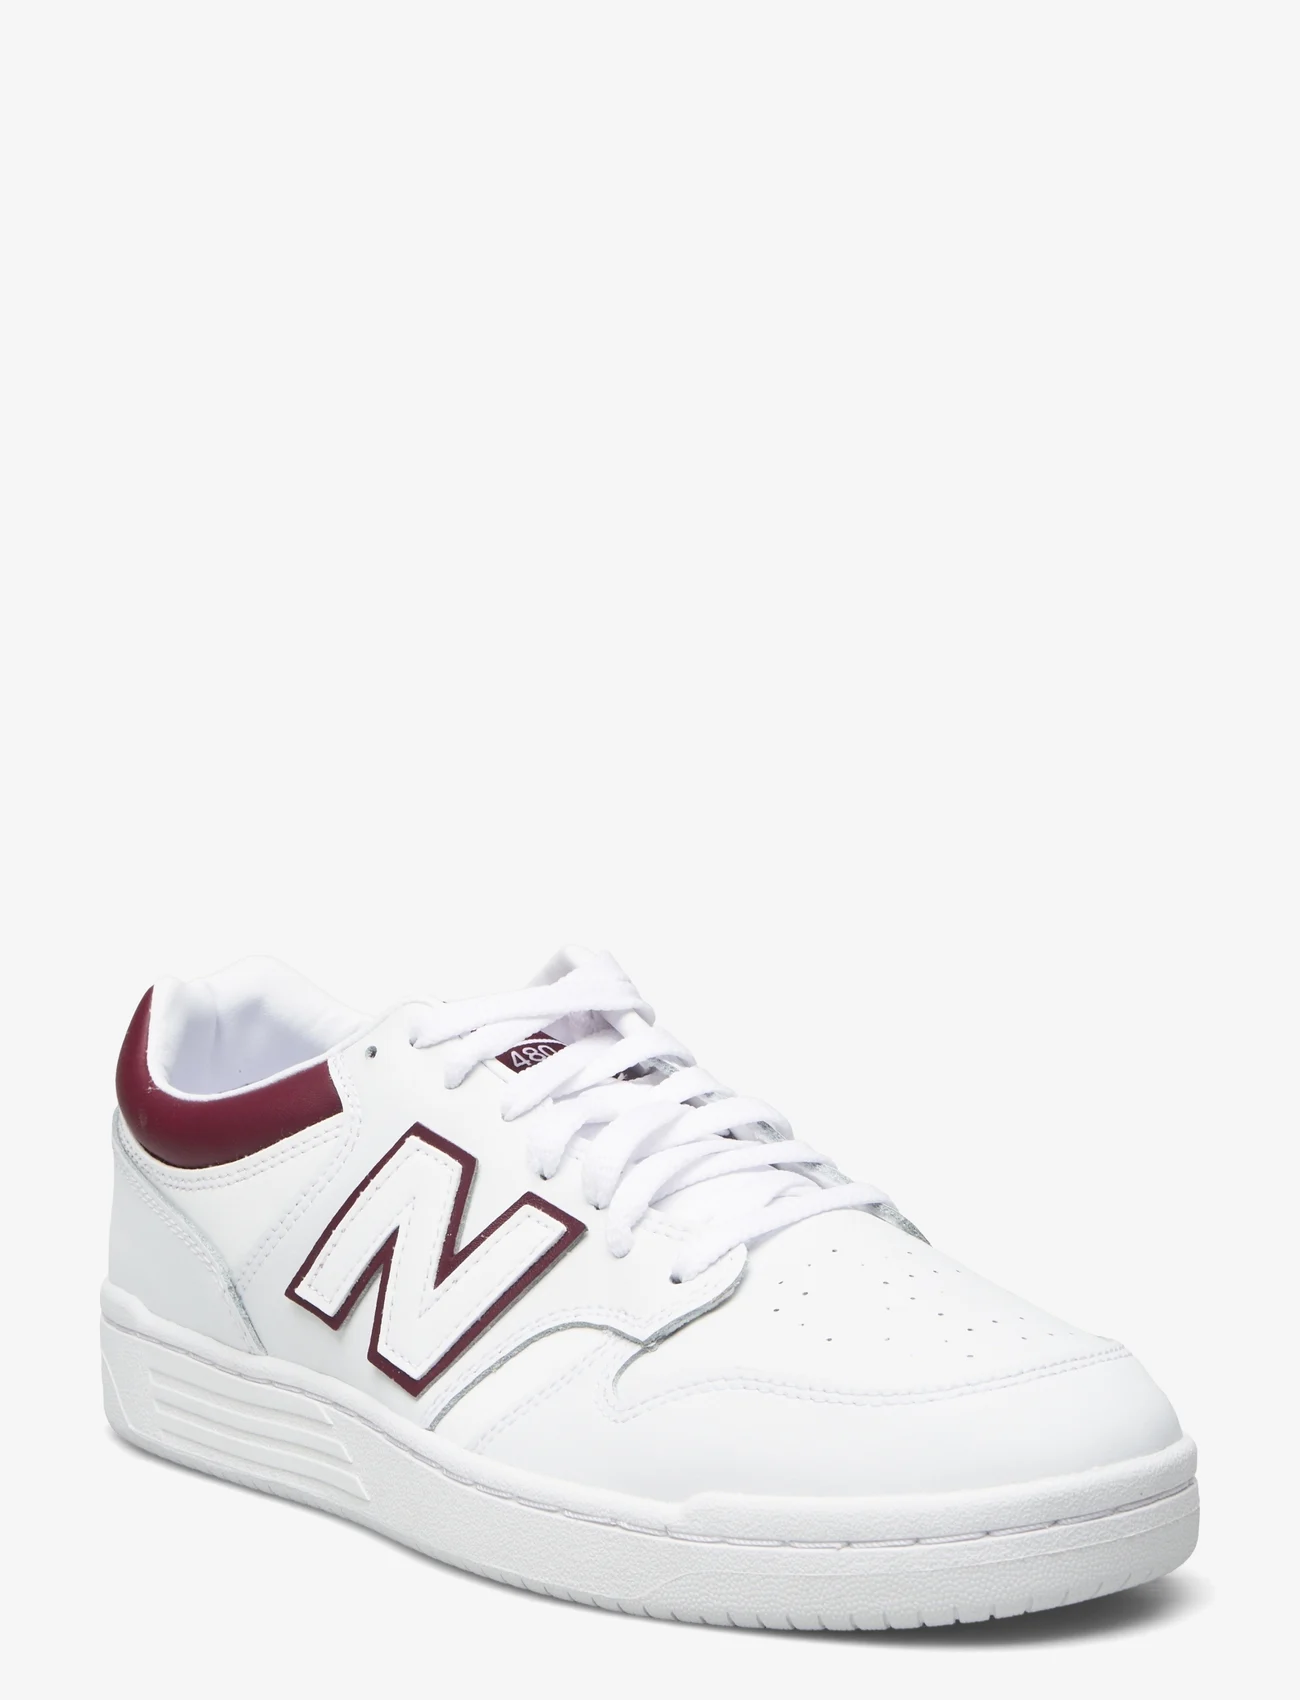 New Balance - New Balance BB480 - låga sneakers - white - 0